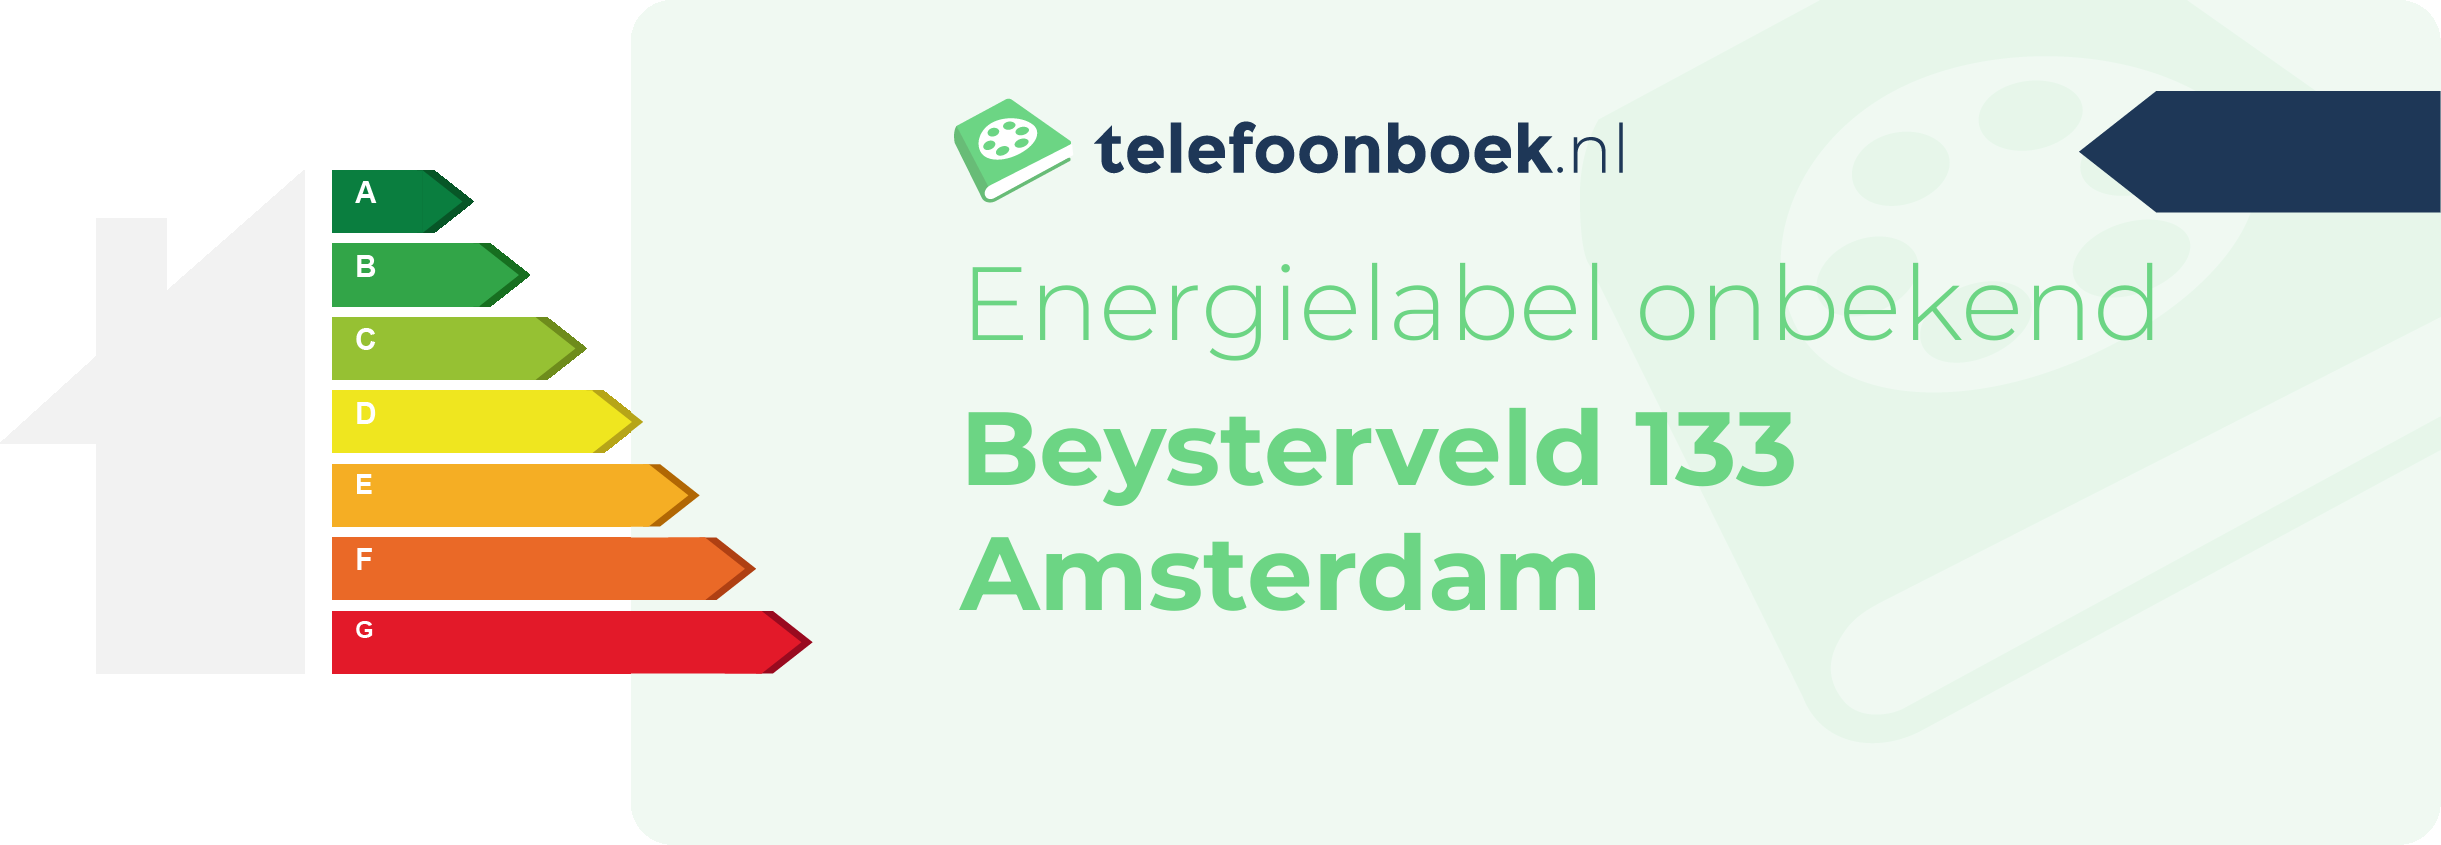 Energielabel Beysterveld 133 Amsterdam